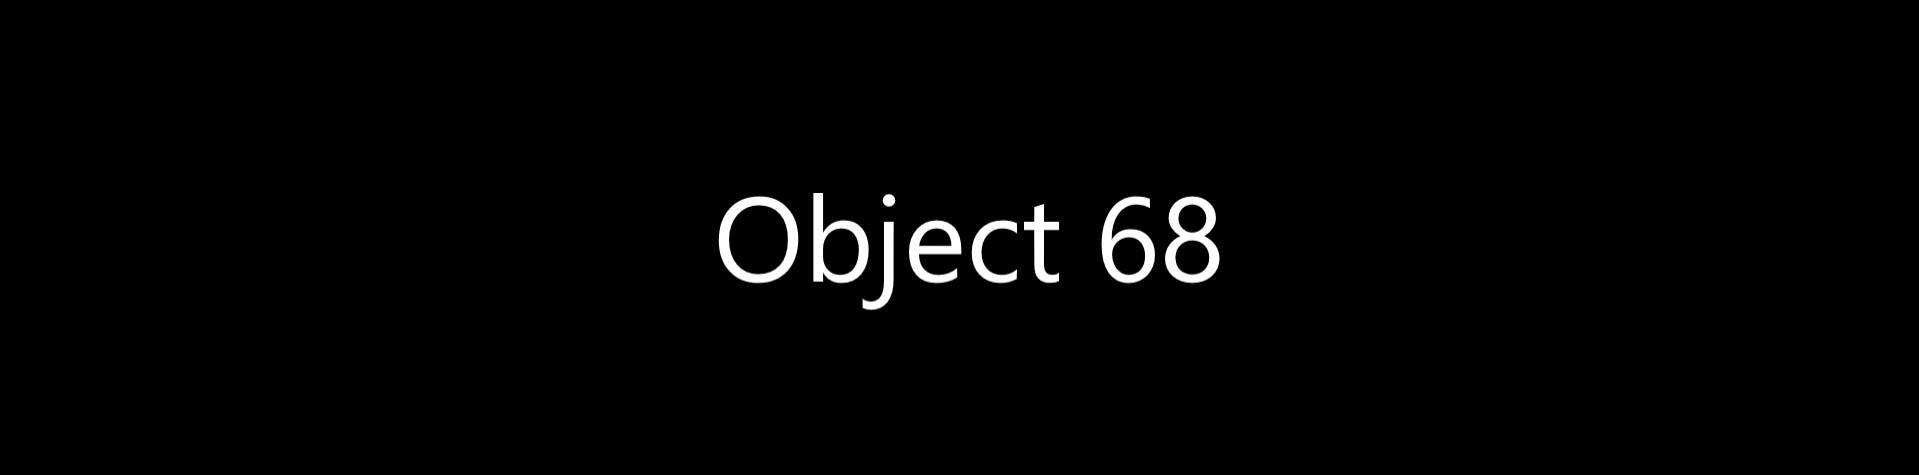 Object 68